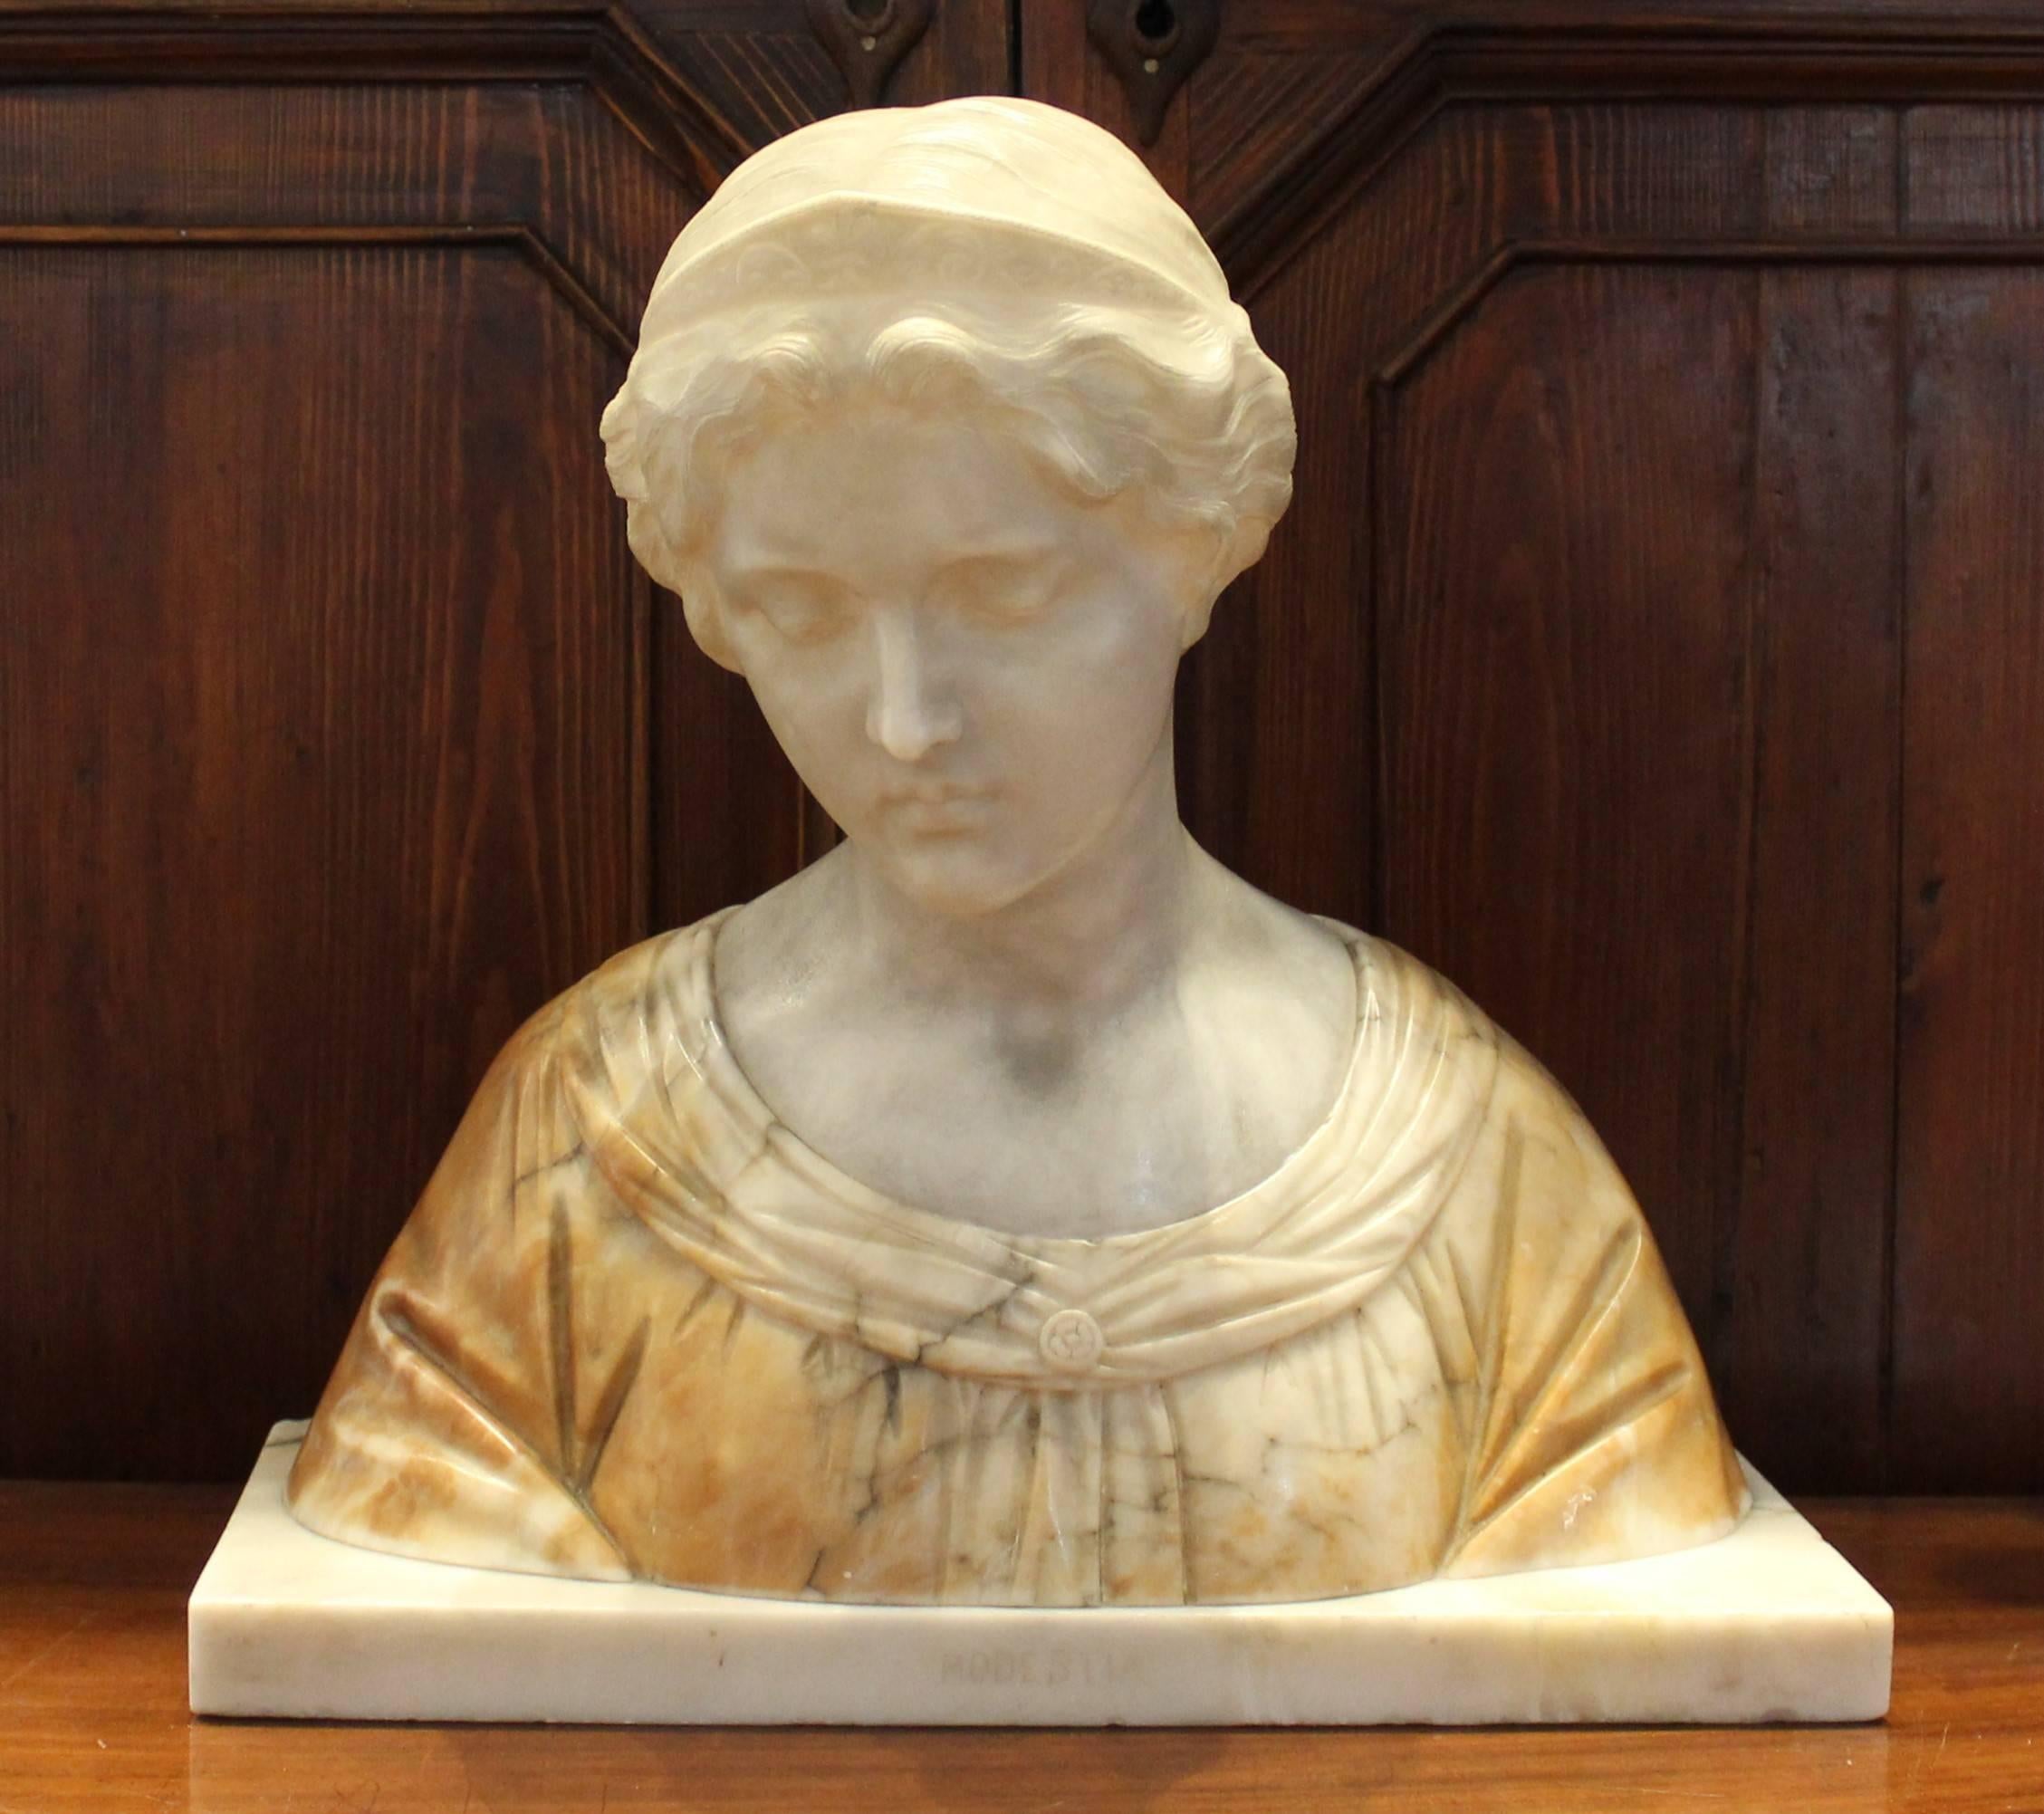 19th century Italian alabaster bust. Titled 'Modestia'.